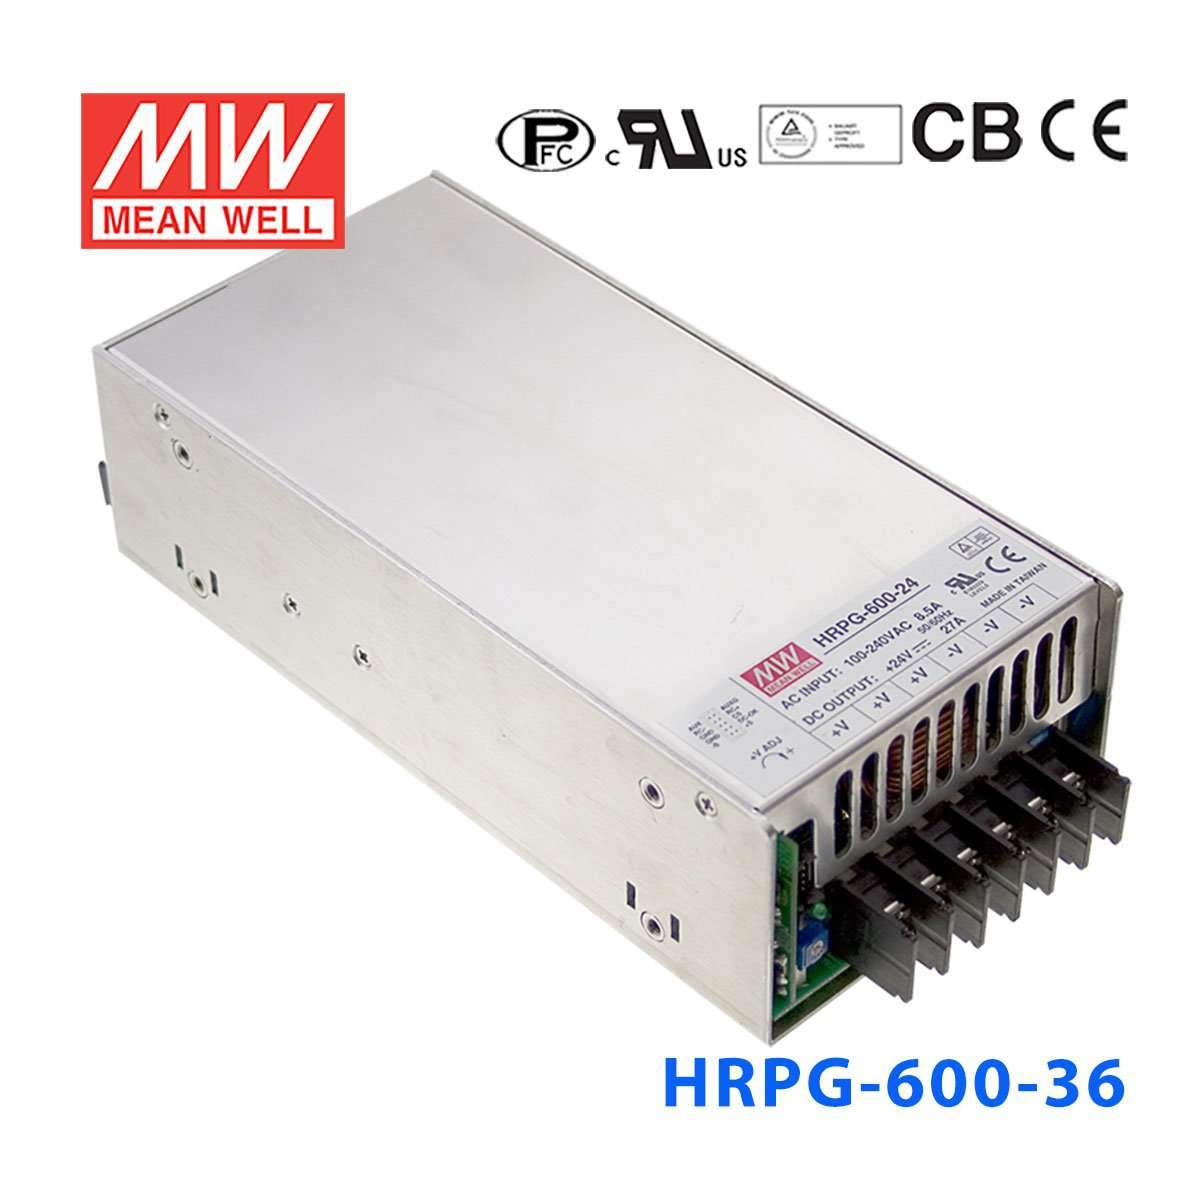 Mean Well HRPGG-600-36  Power Supply 630W 36V